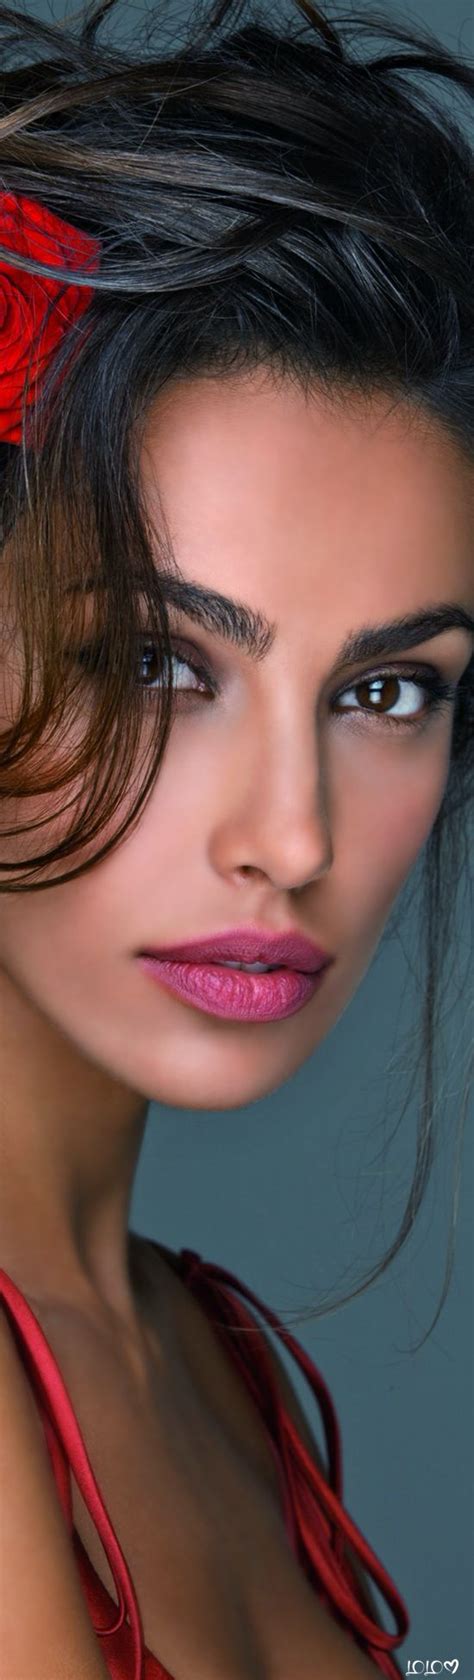 madalina ghenea madalinaghenea beautiful women faces beautiful lips hair beauty